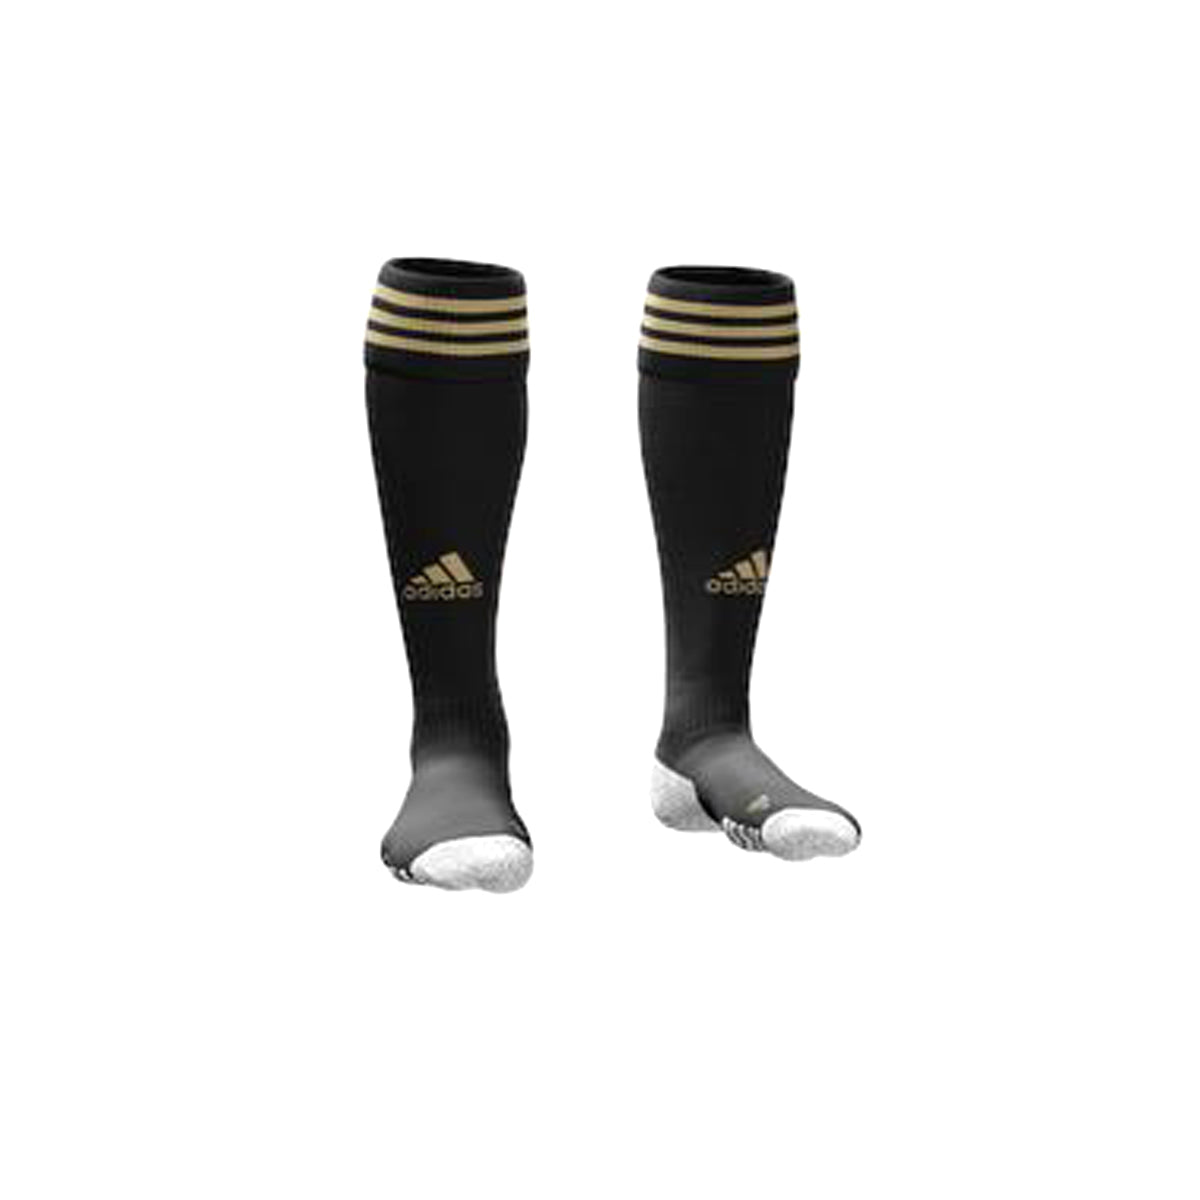 Pearl City Soccer Club Socks | Black and White Soccer Socks Adidas Size 1 (3-4.5 shoes) Black 